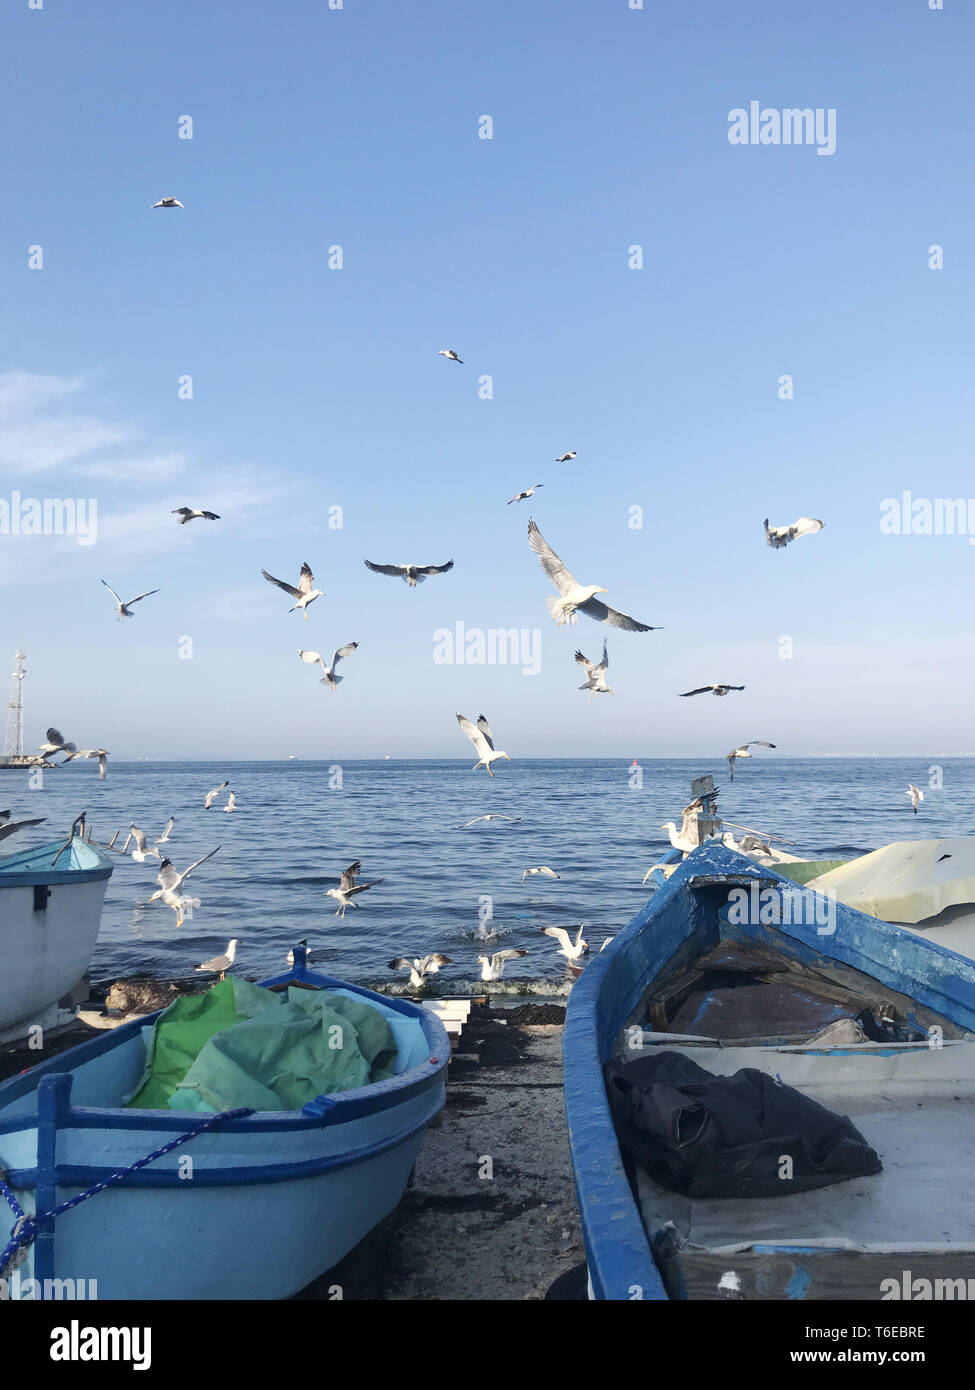 Seagulls wheeling above the boat Stock Photo